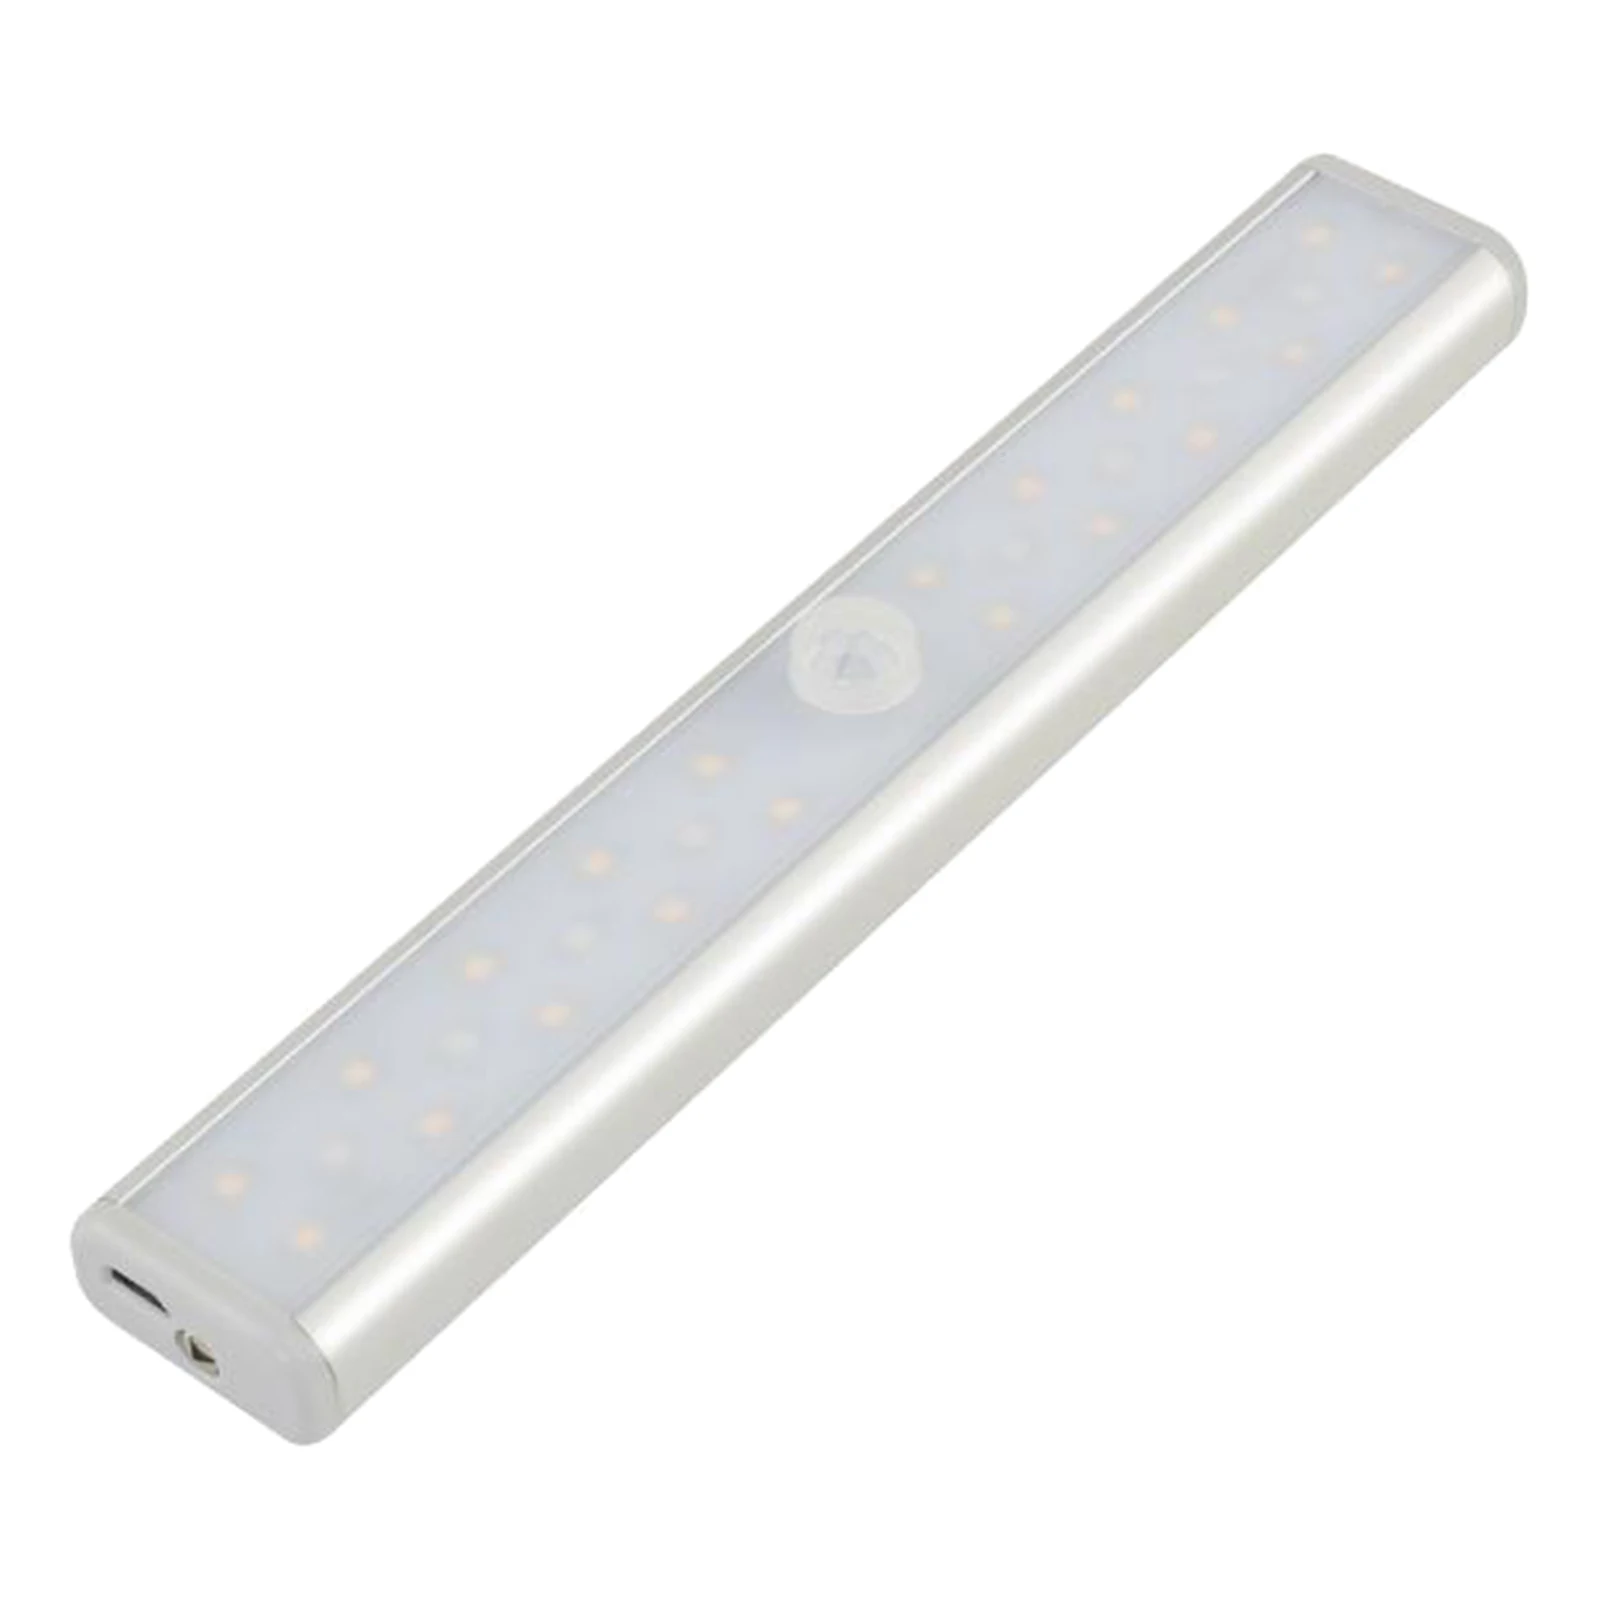 LED UV Disinfection Light Cupboard Wardrobe Night Light 1000mAH USB Charge